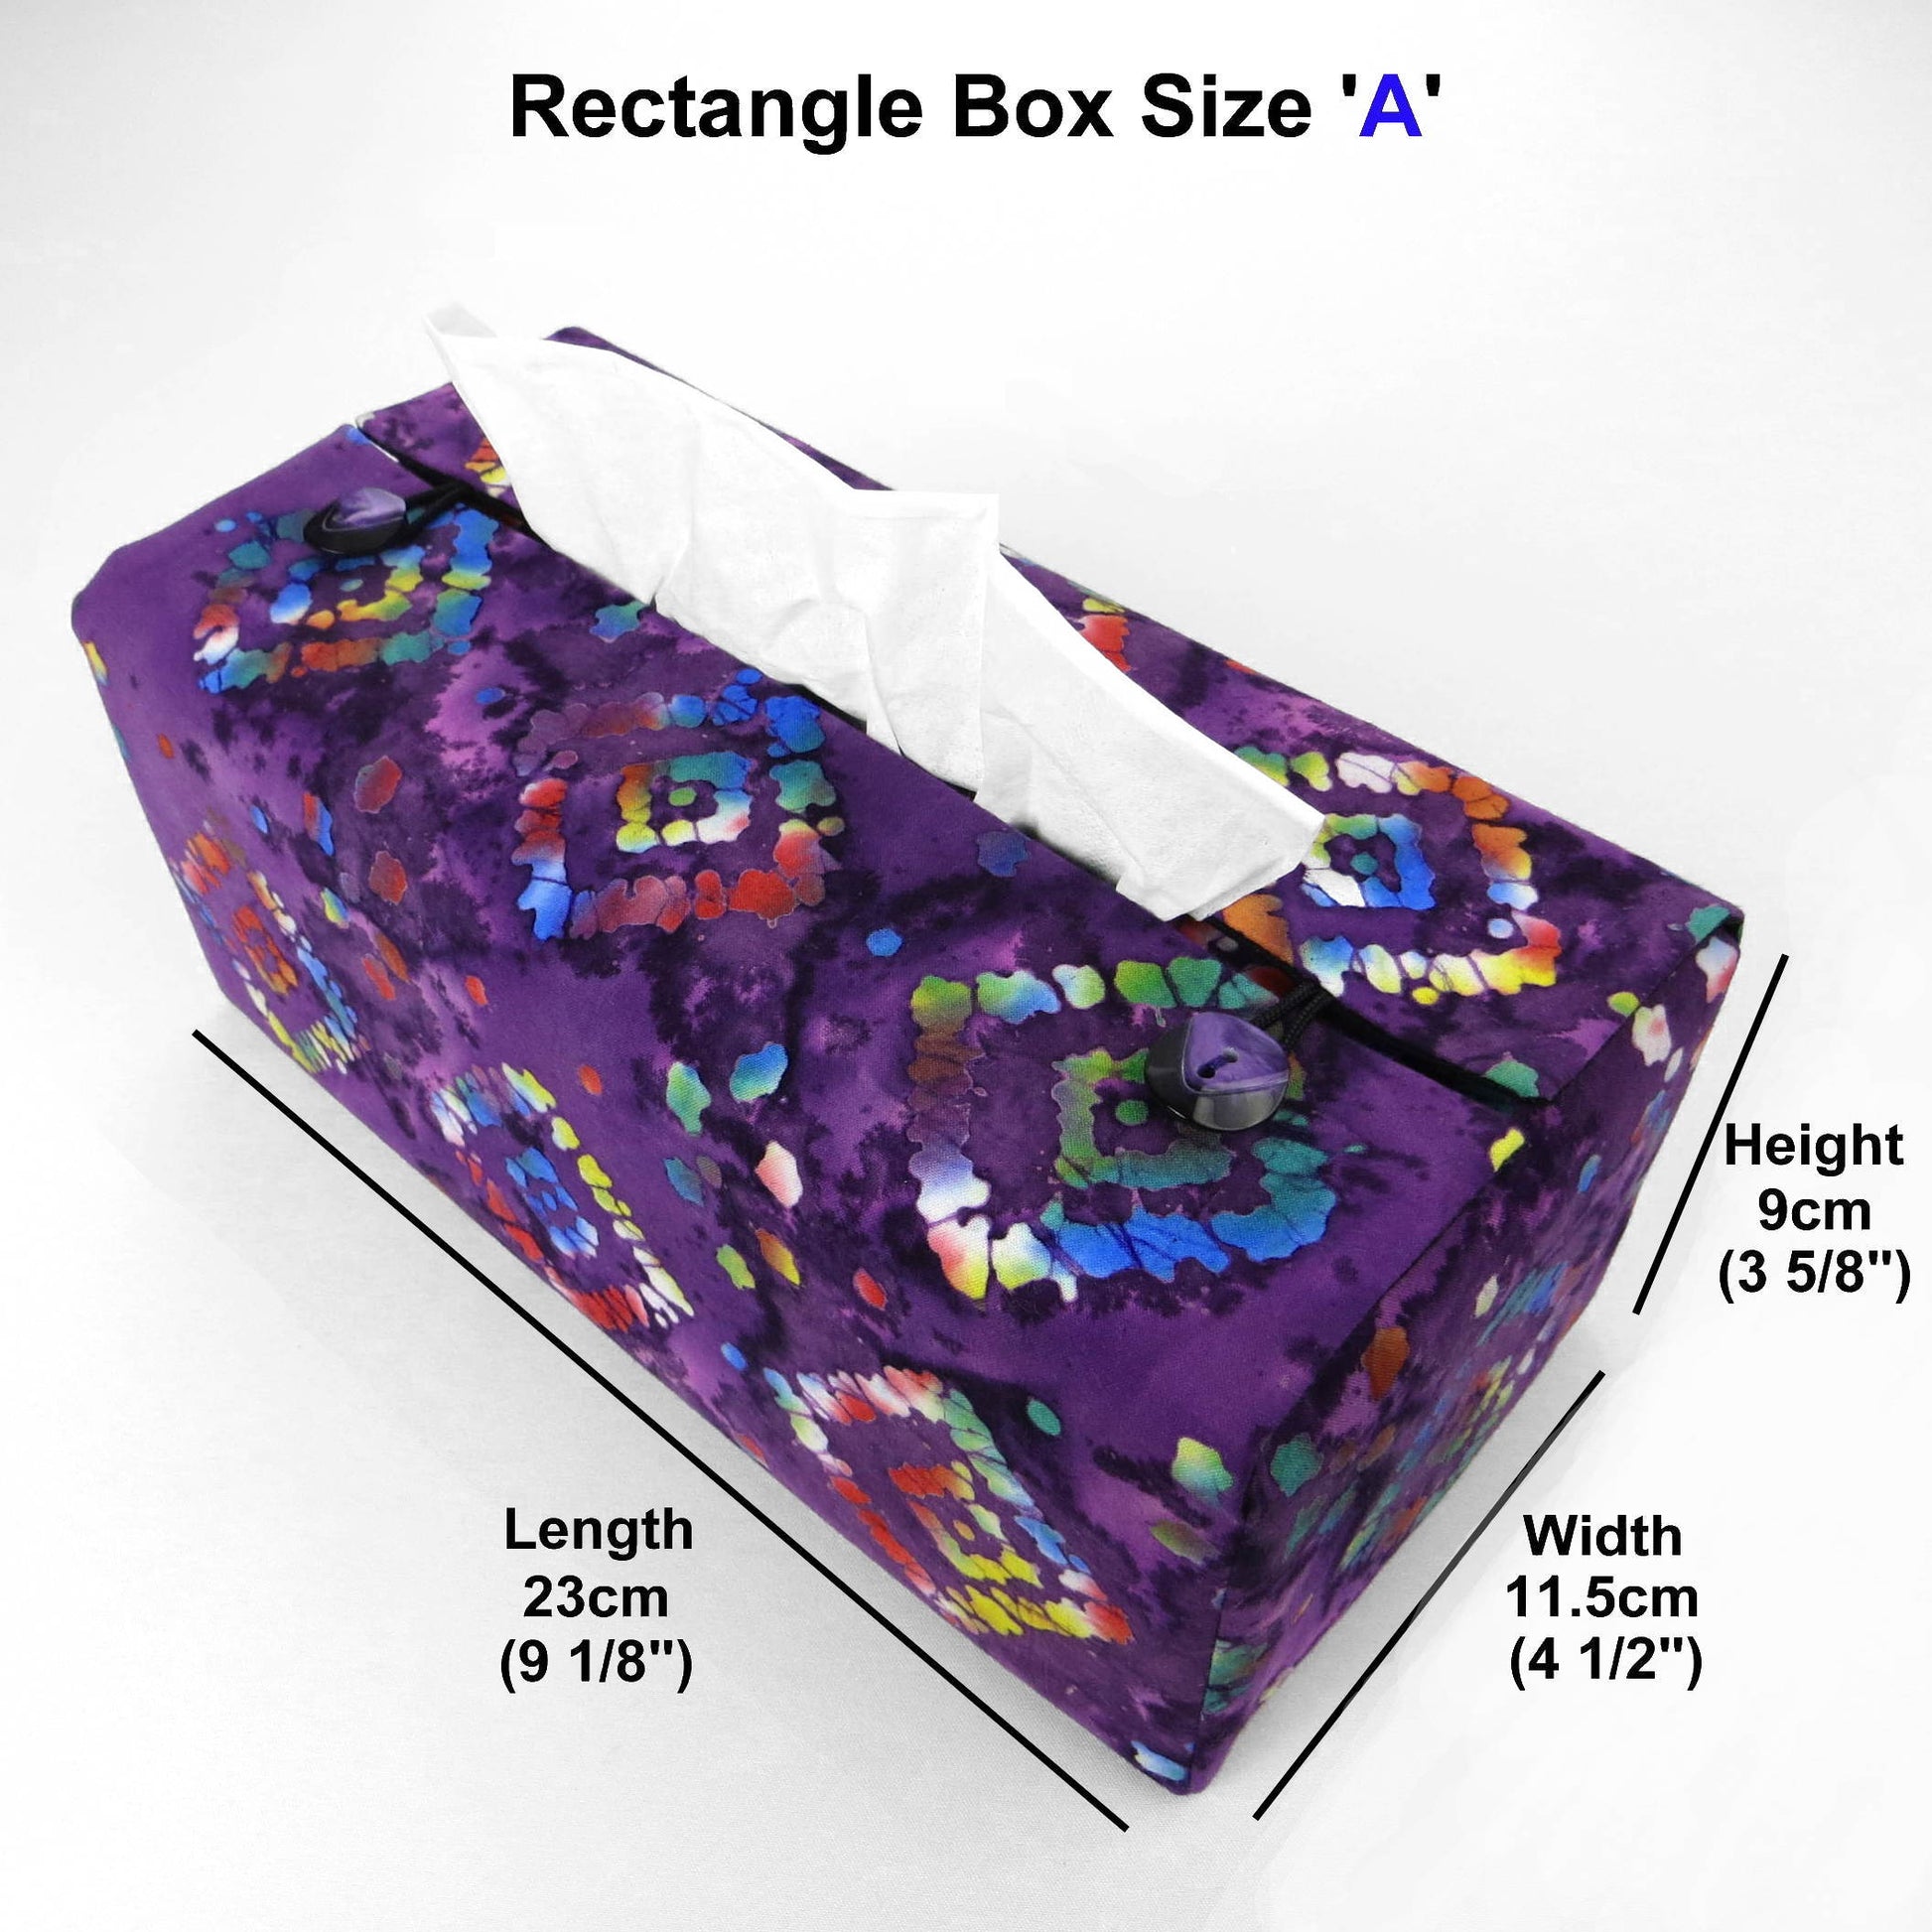 Batik printed cotton rectangle tissue box cover with tie dye multi colour diamond design on purple background